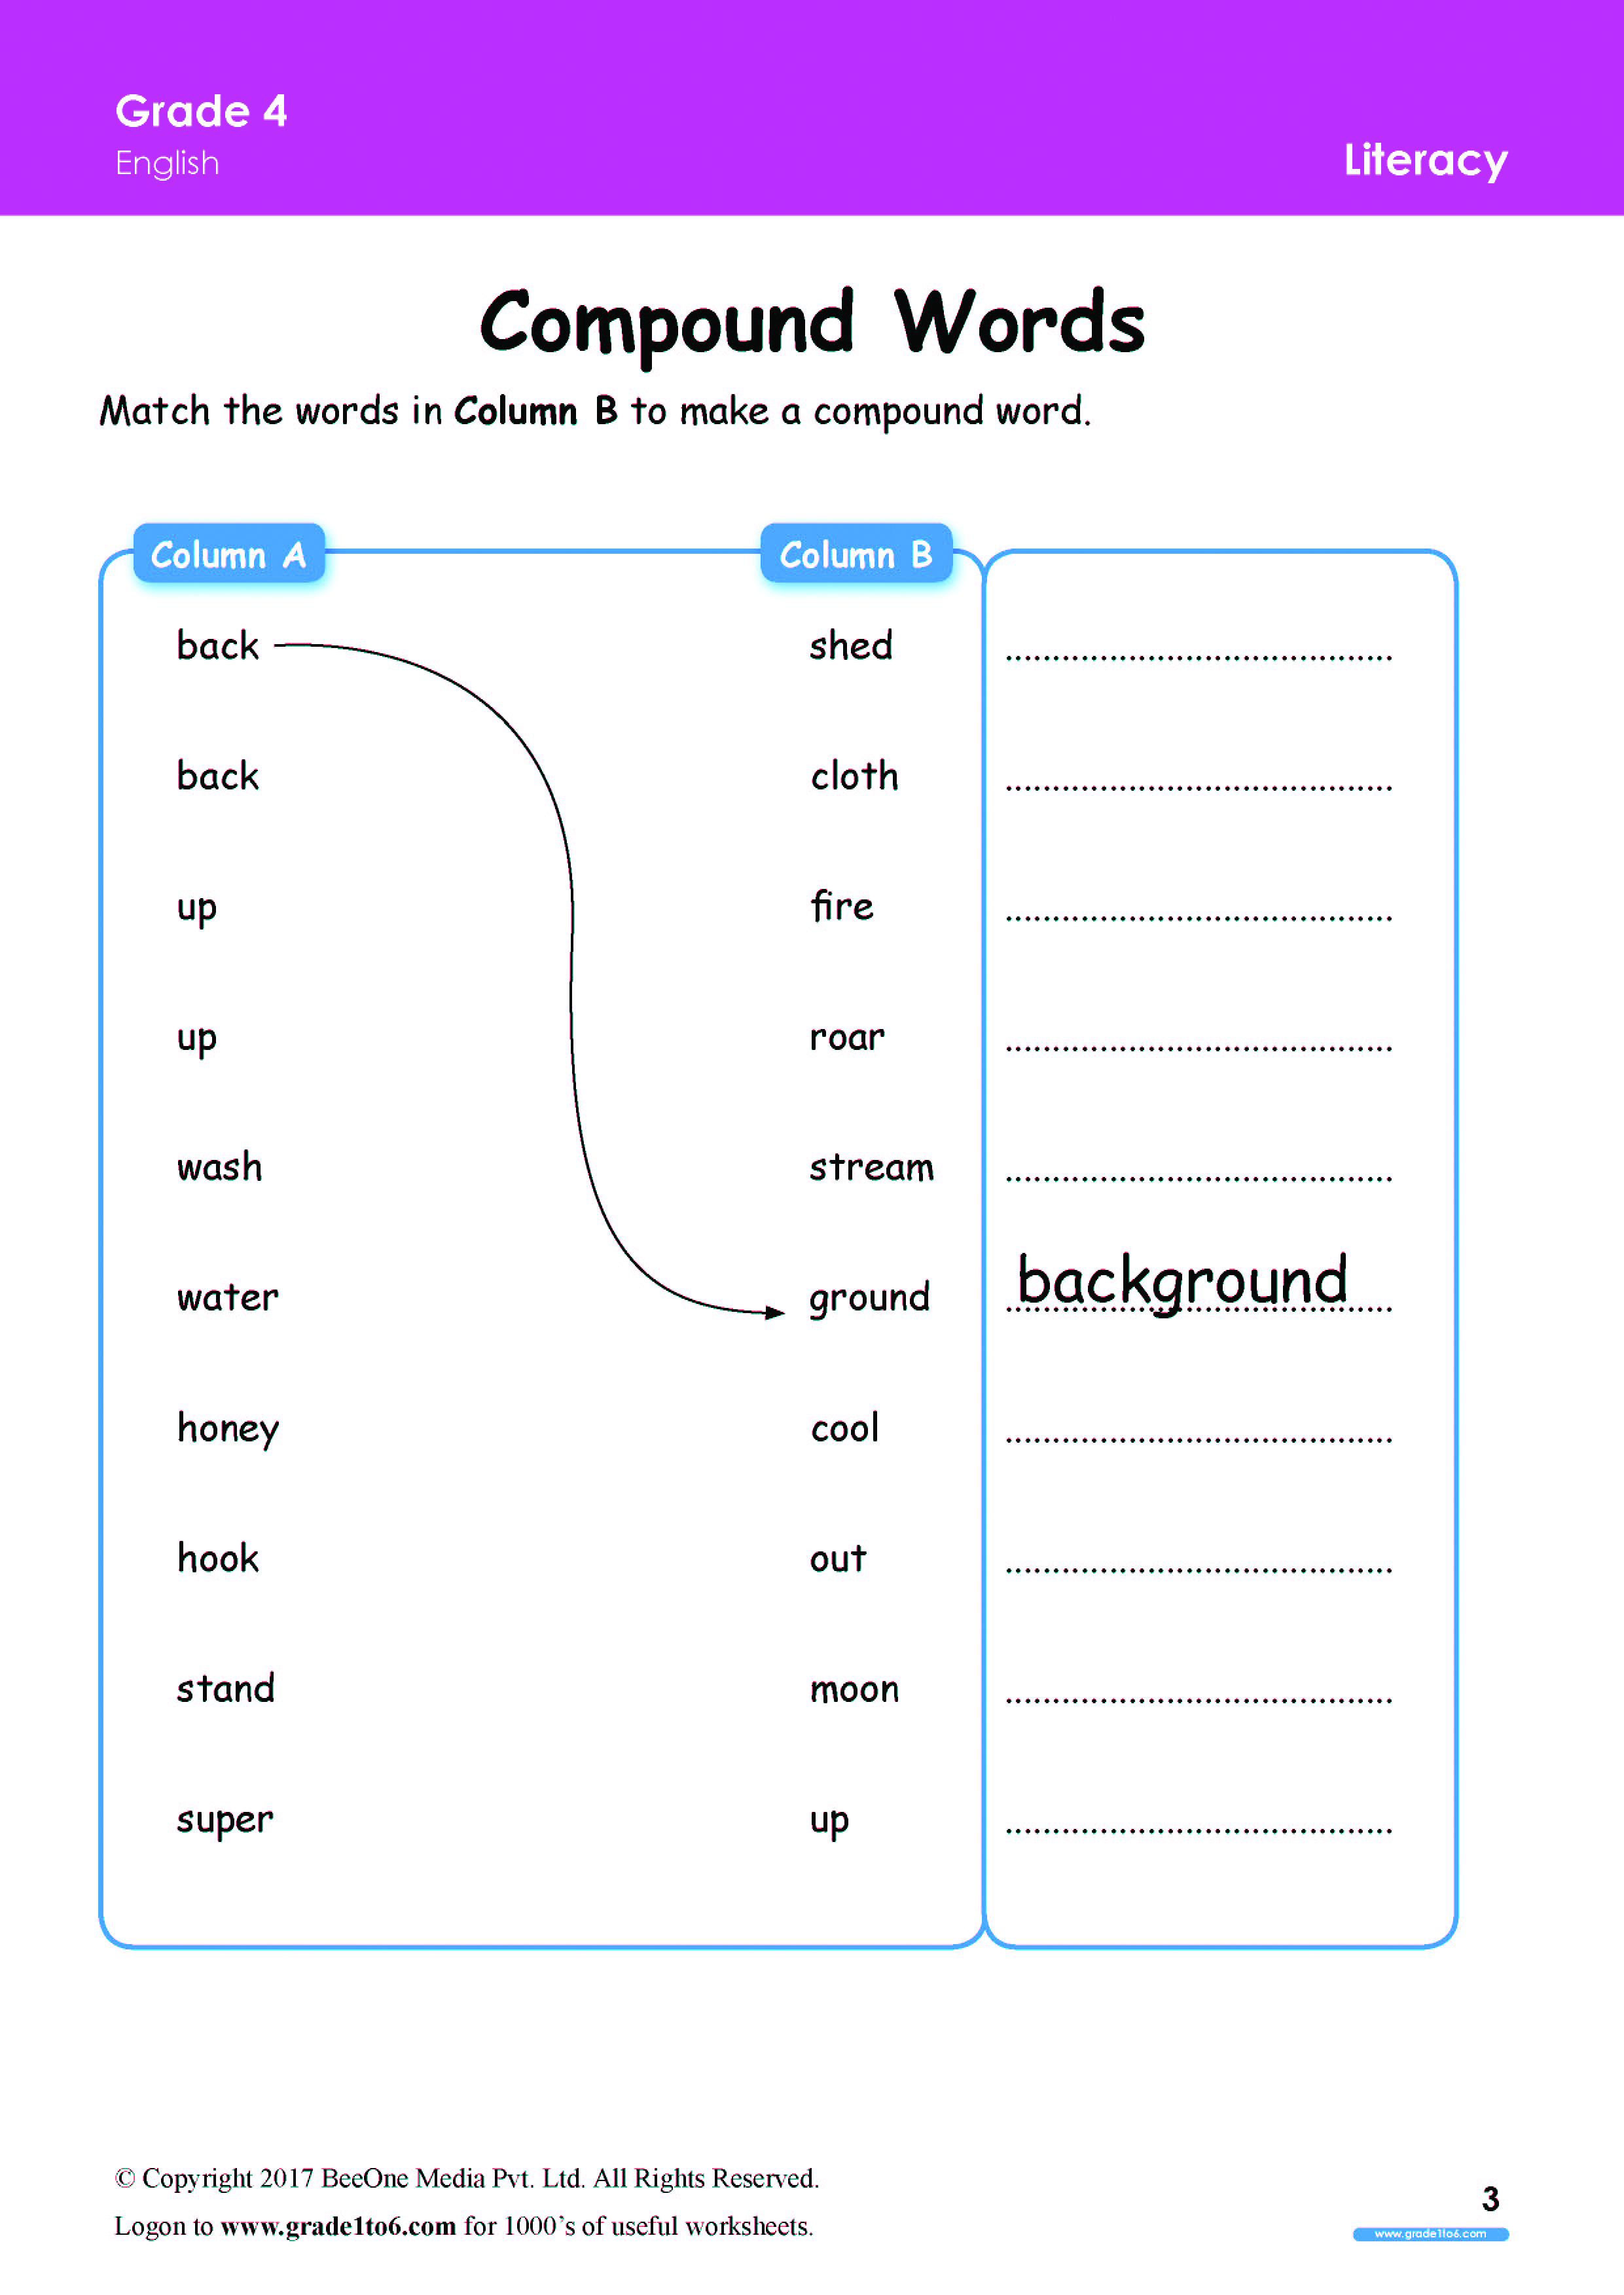 compound words worksheets for grade 4wwwgrade1to6com